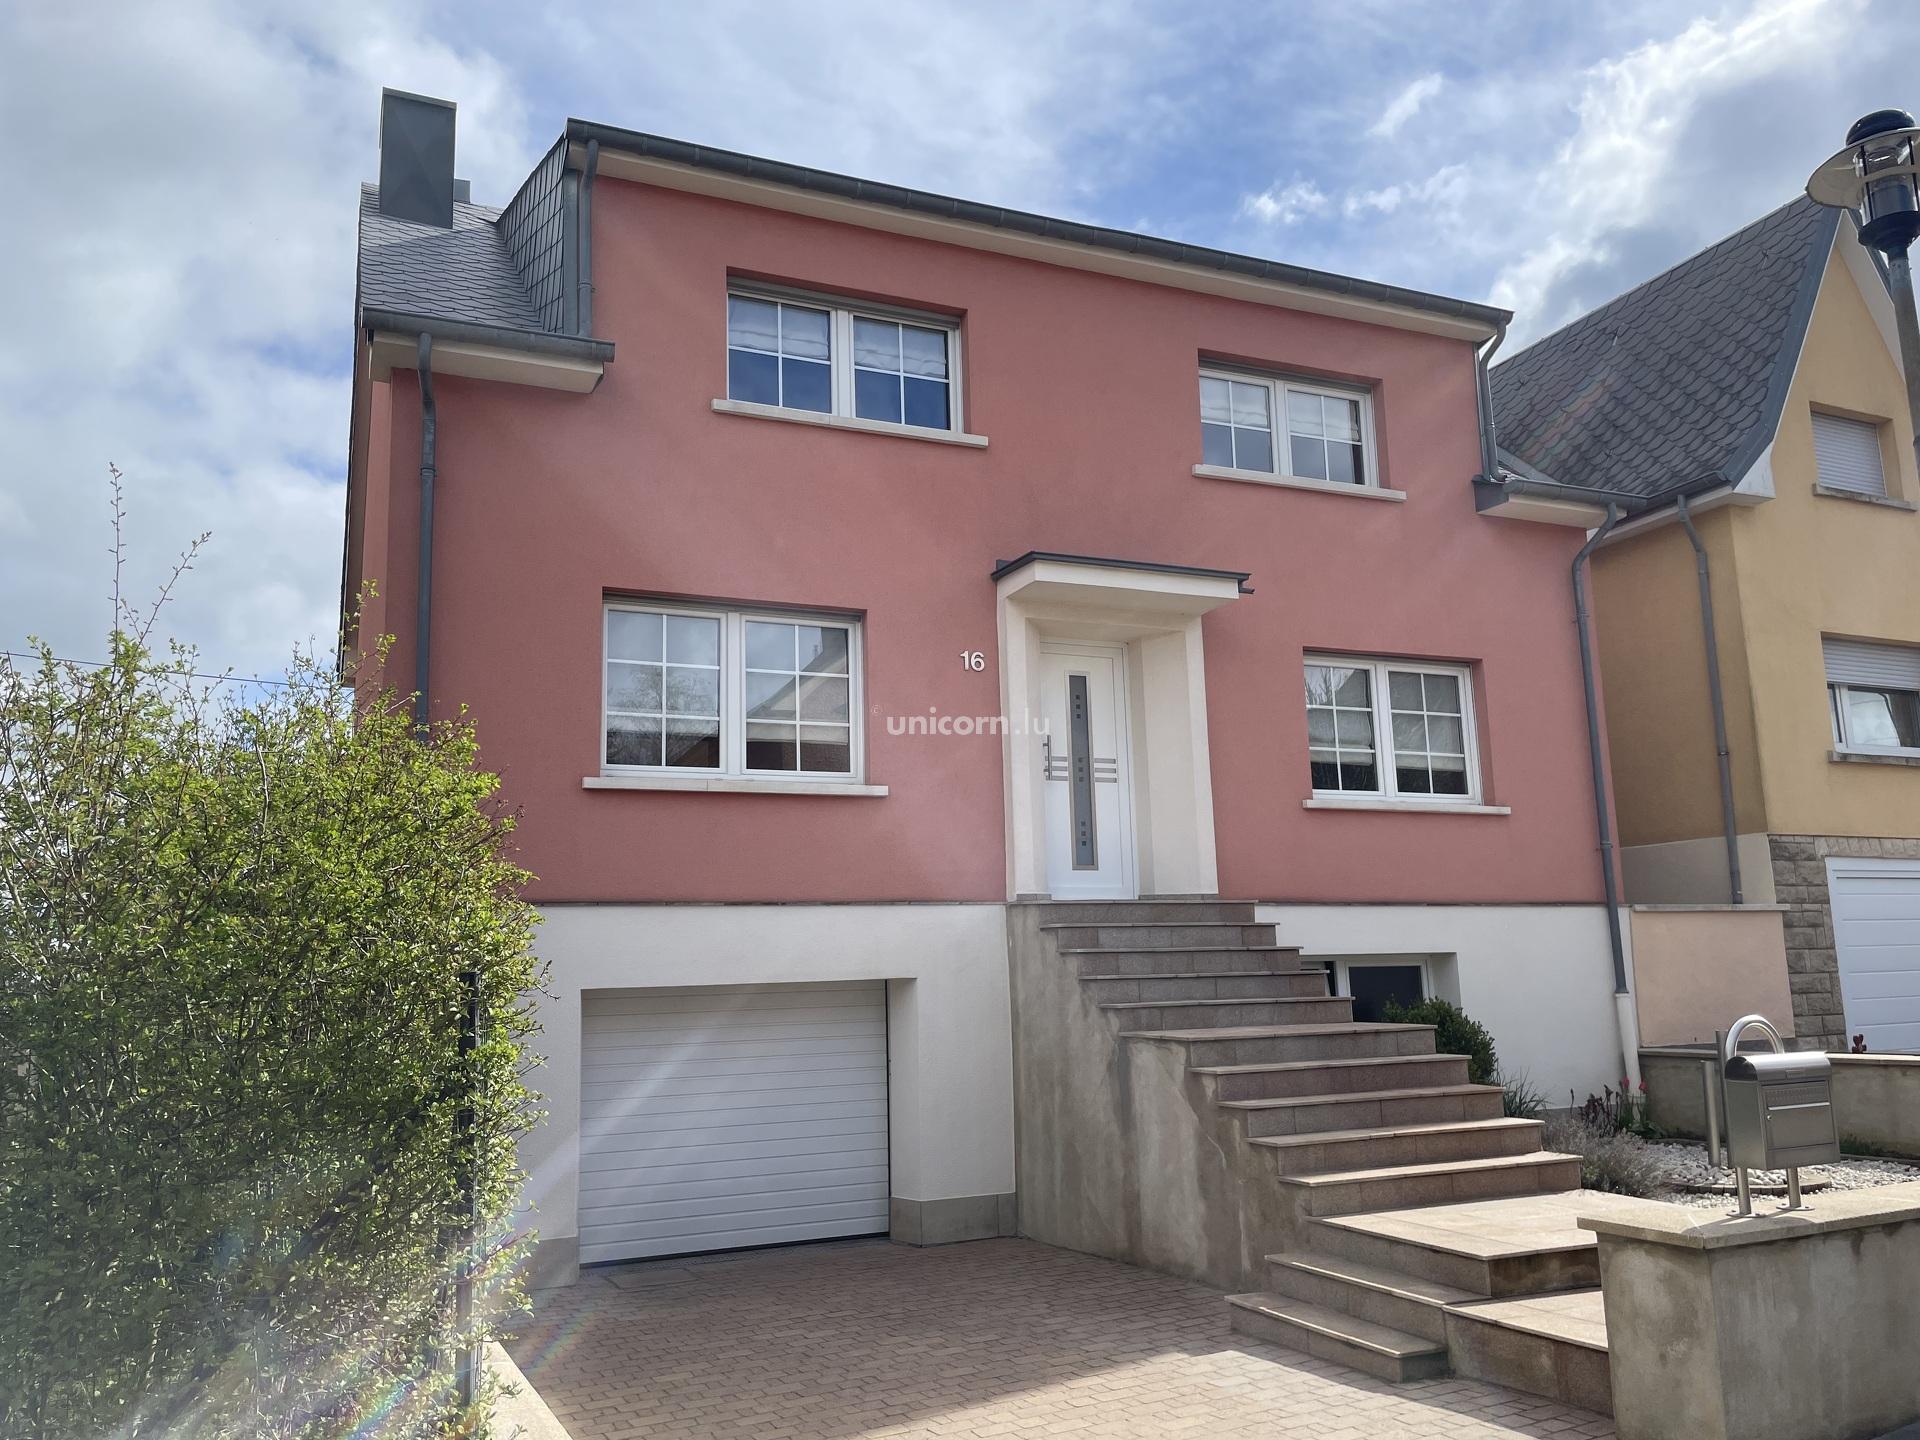 House for sale in Mondercange  - 171m²